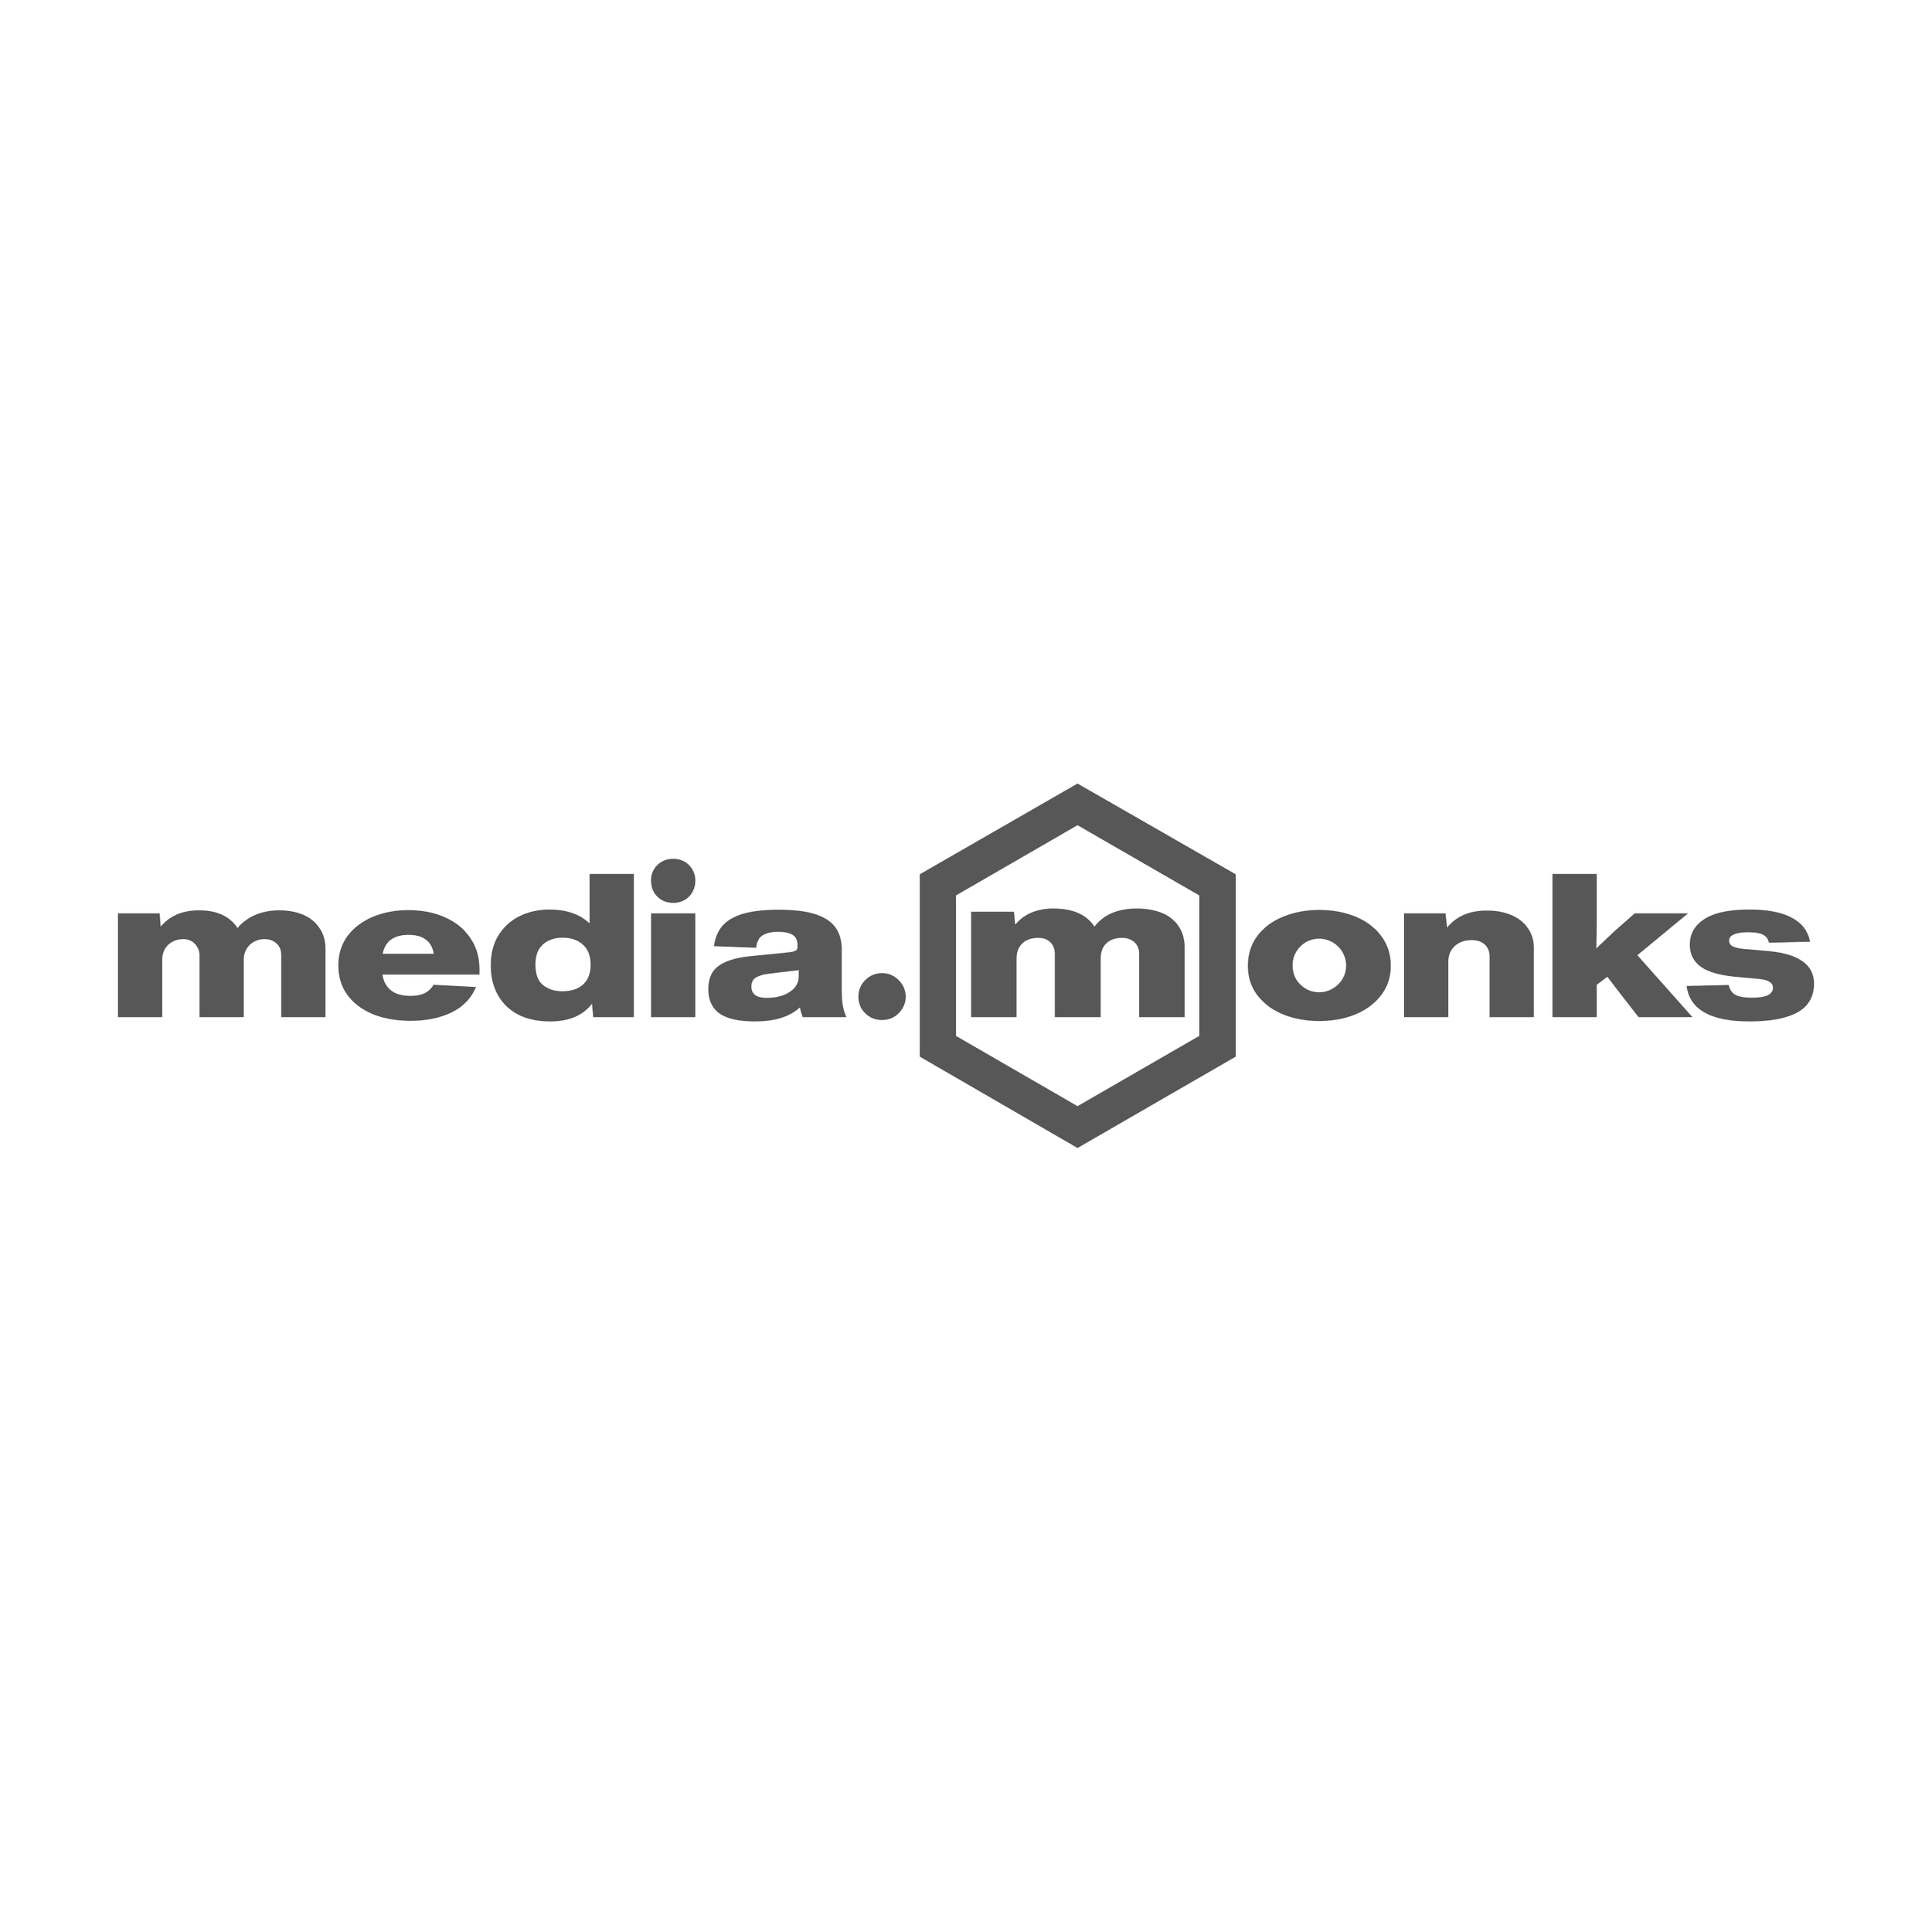 m.m_media._m_onks_b.png